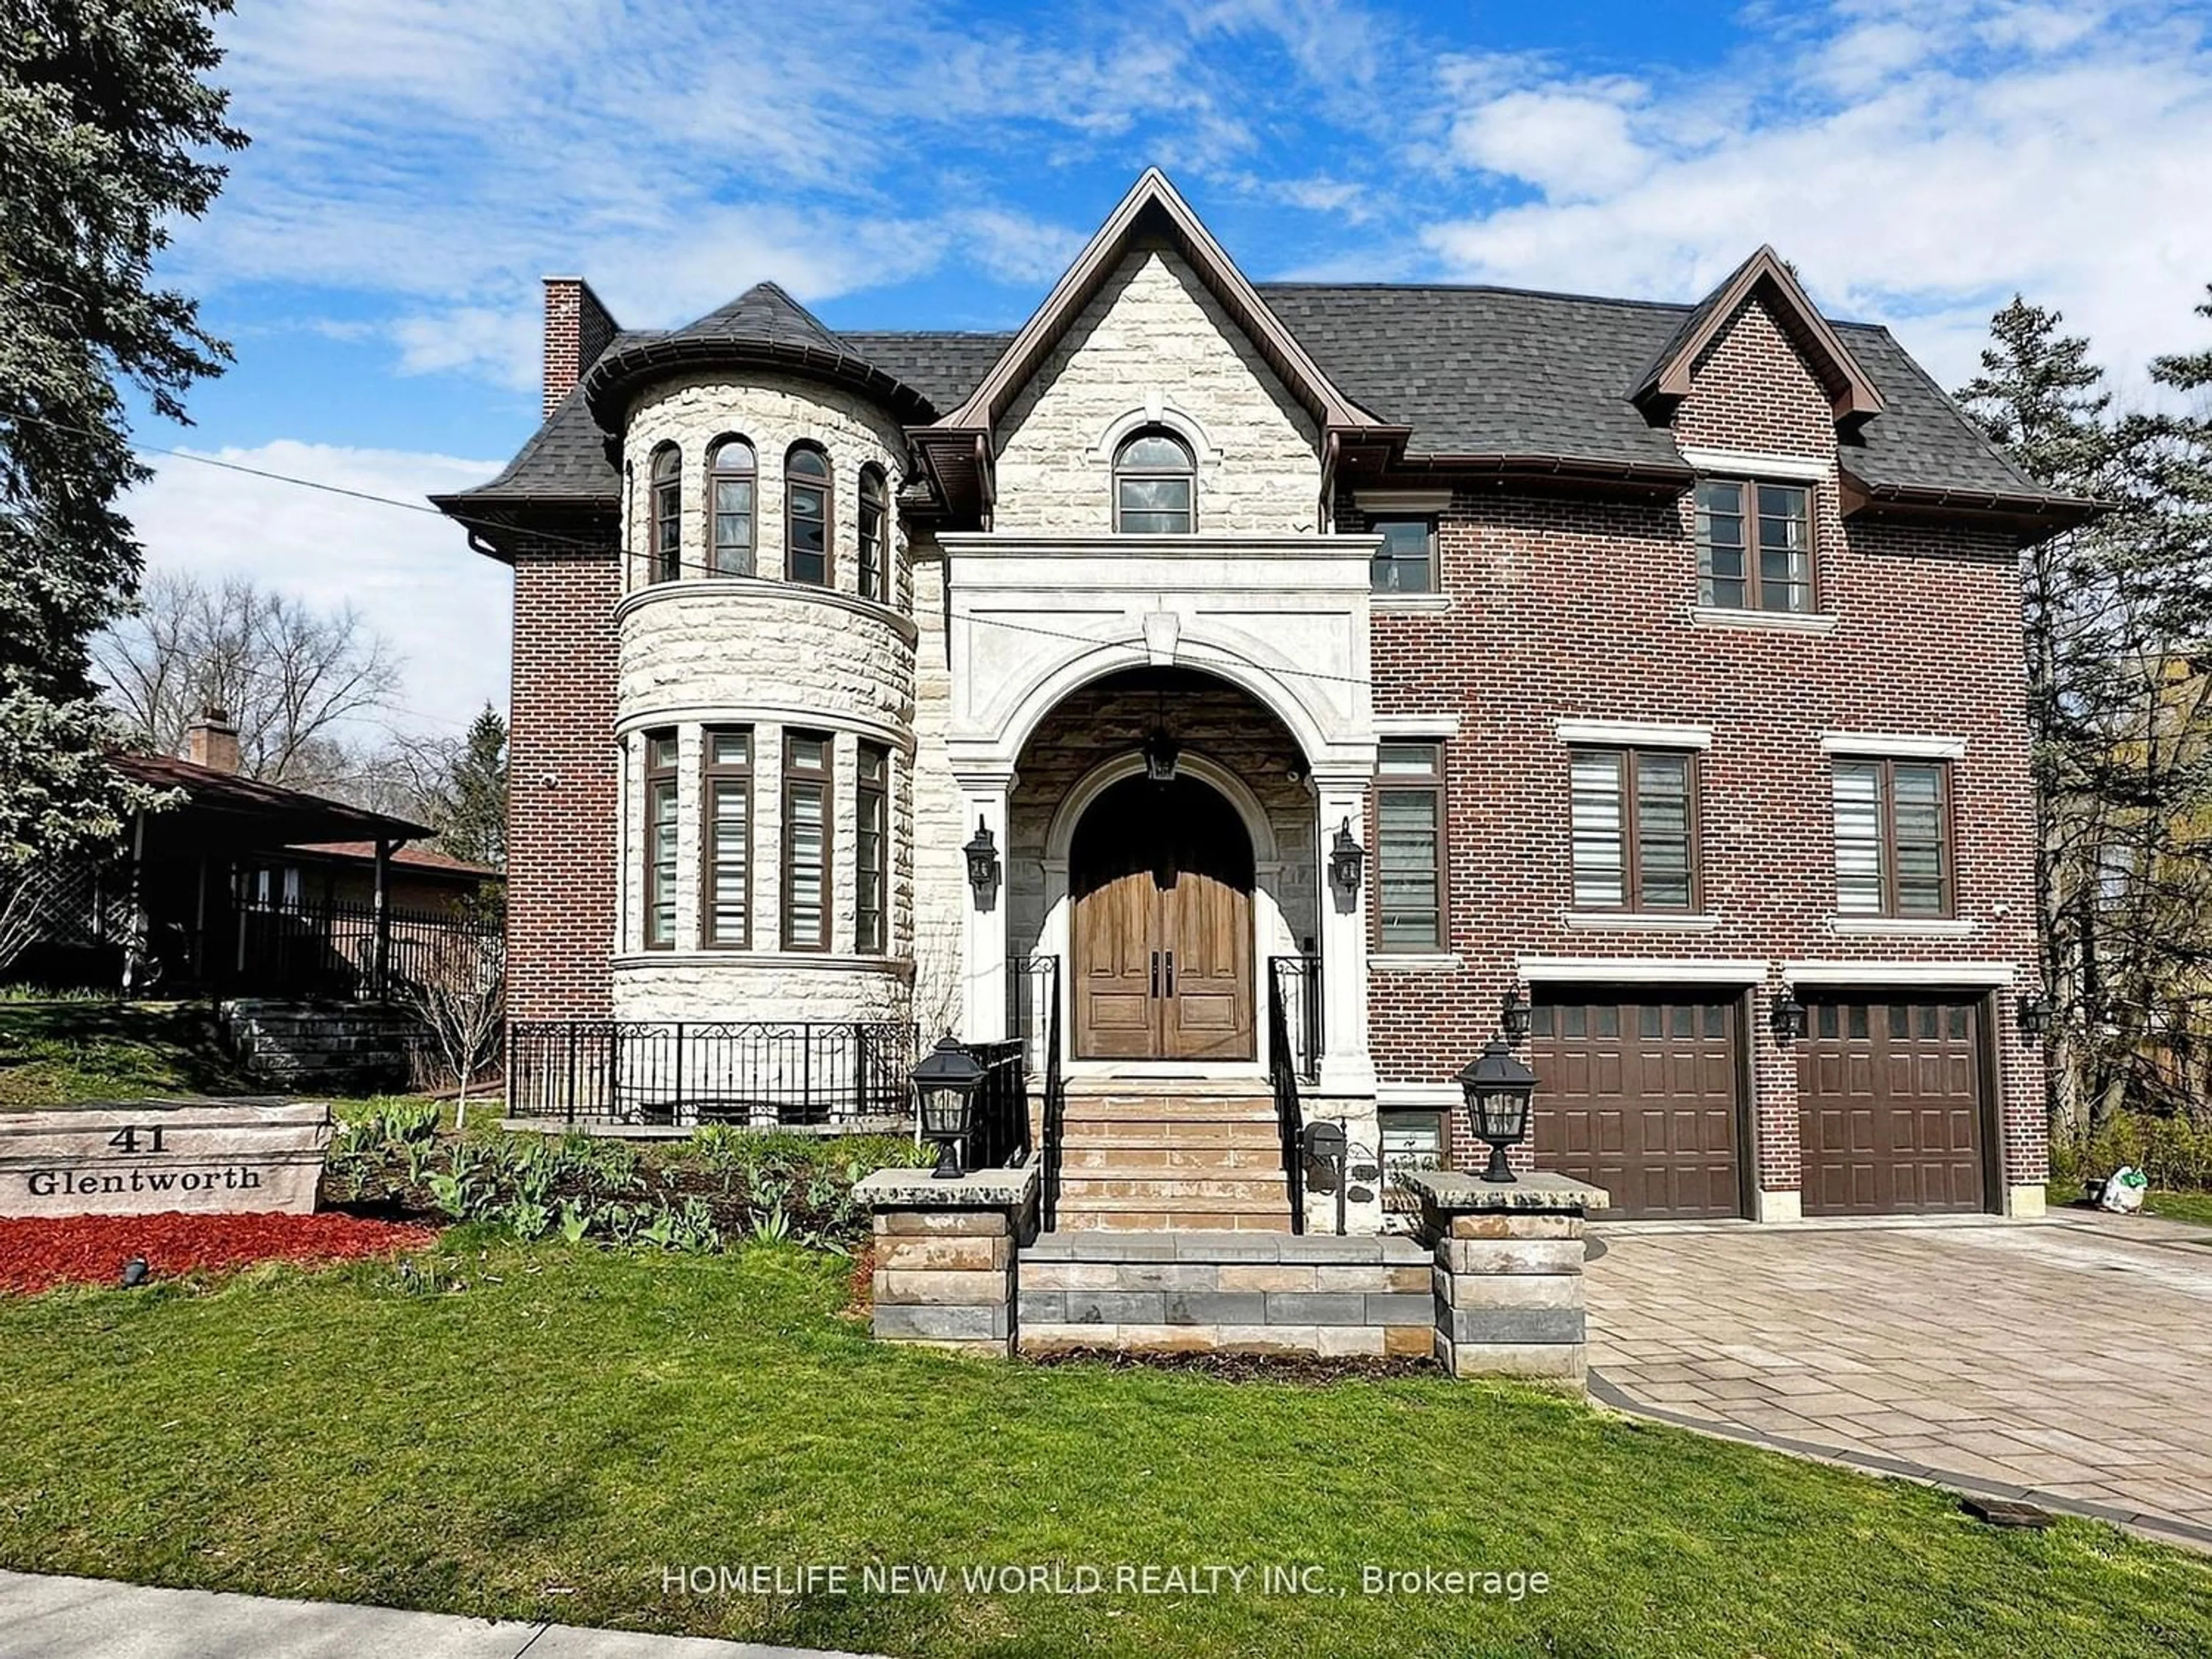 Home with brick exterior material for 41 Glentworth Rd, Toronto Ontario M2J 2E7